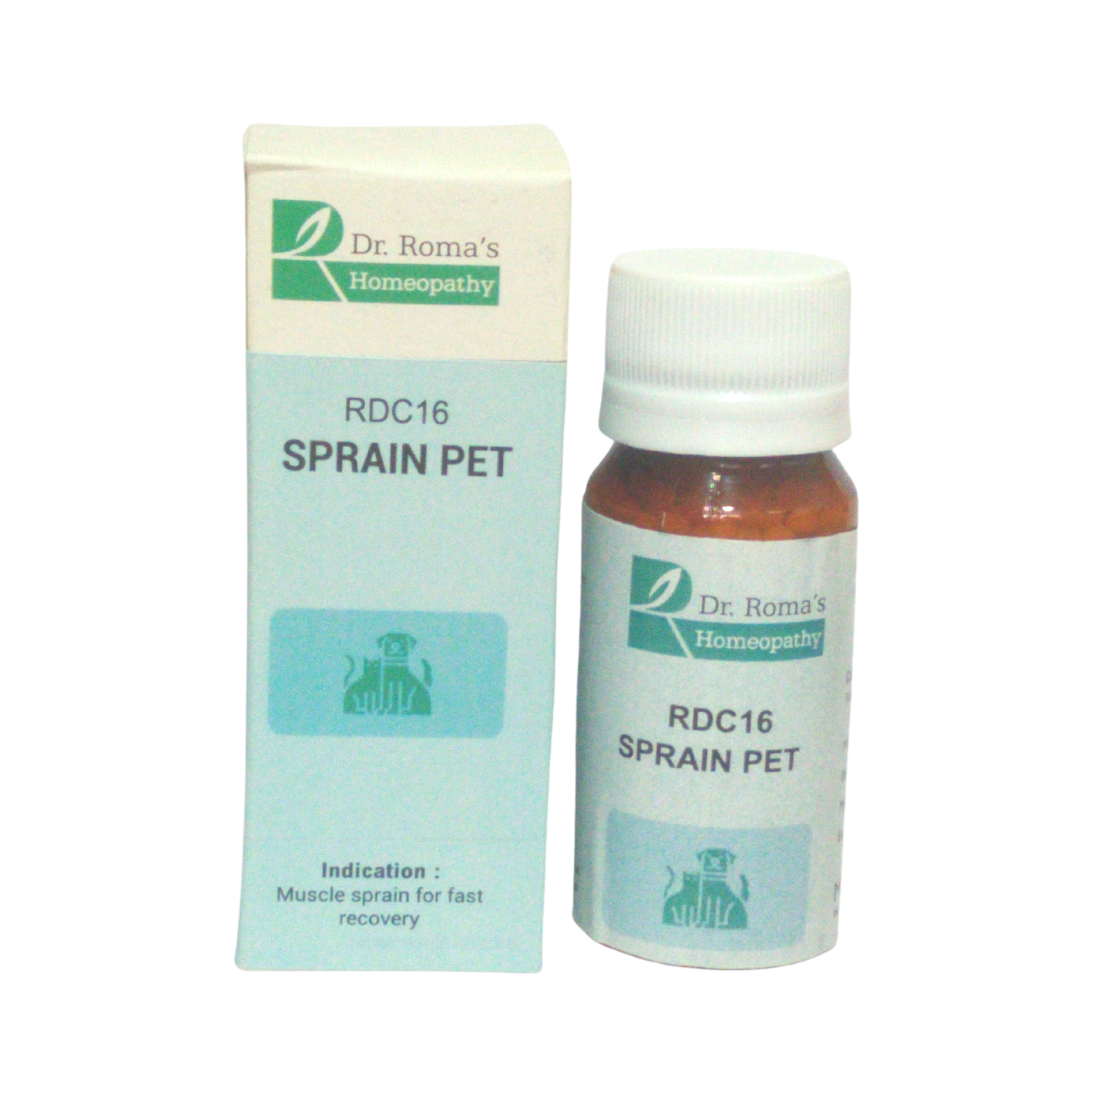 SPRAIN PET for MUSCLE SPRAIN - RDC 16